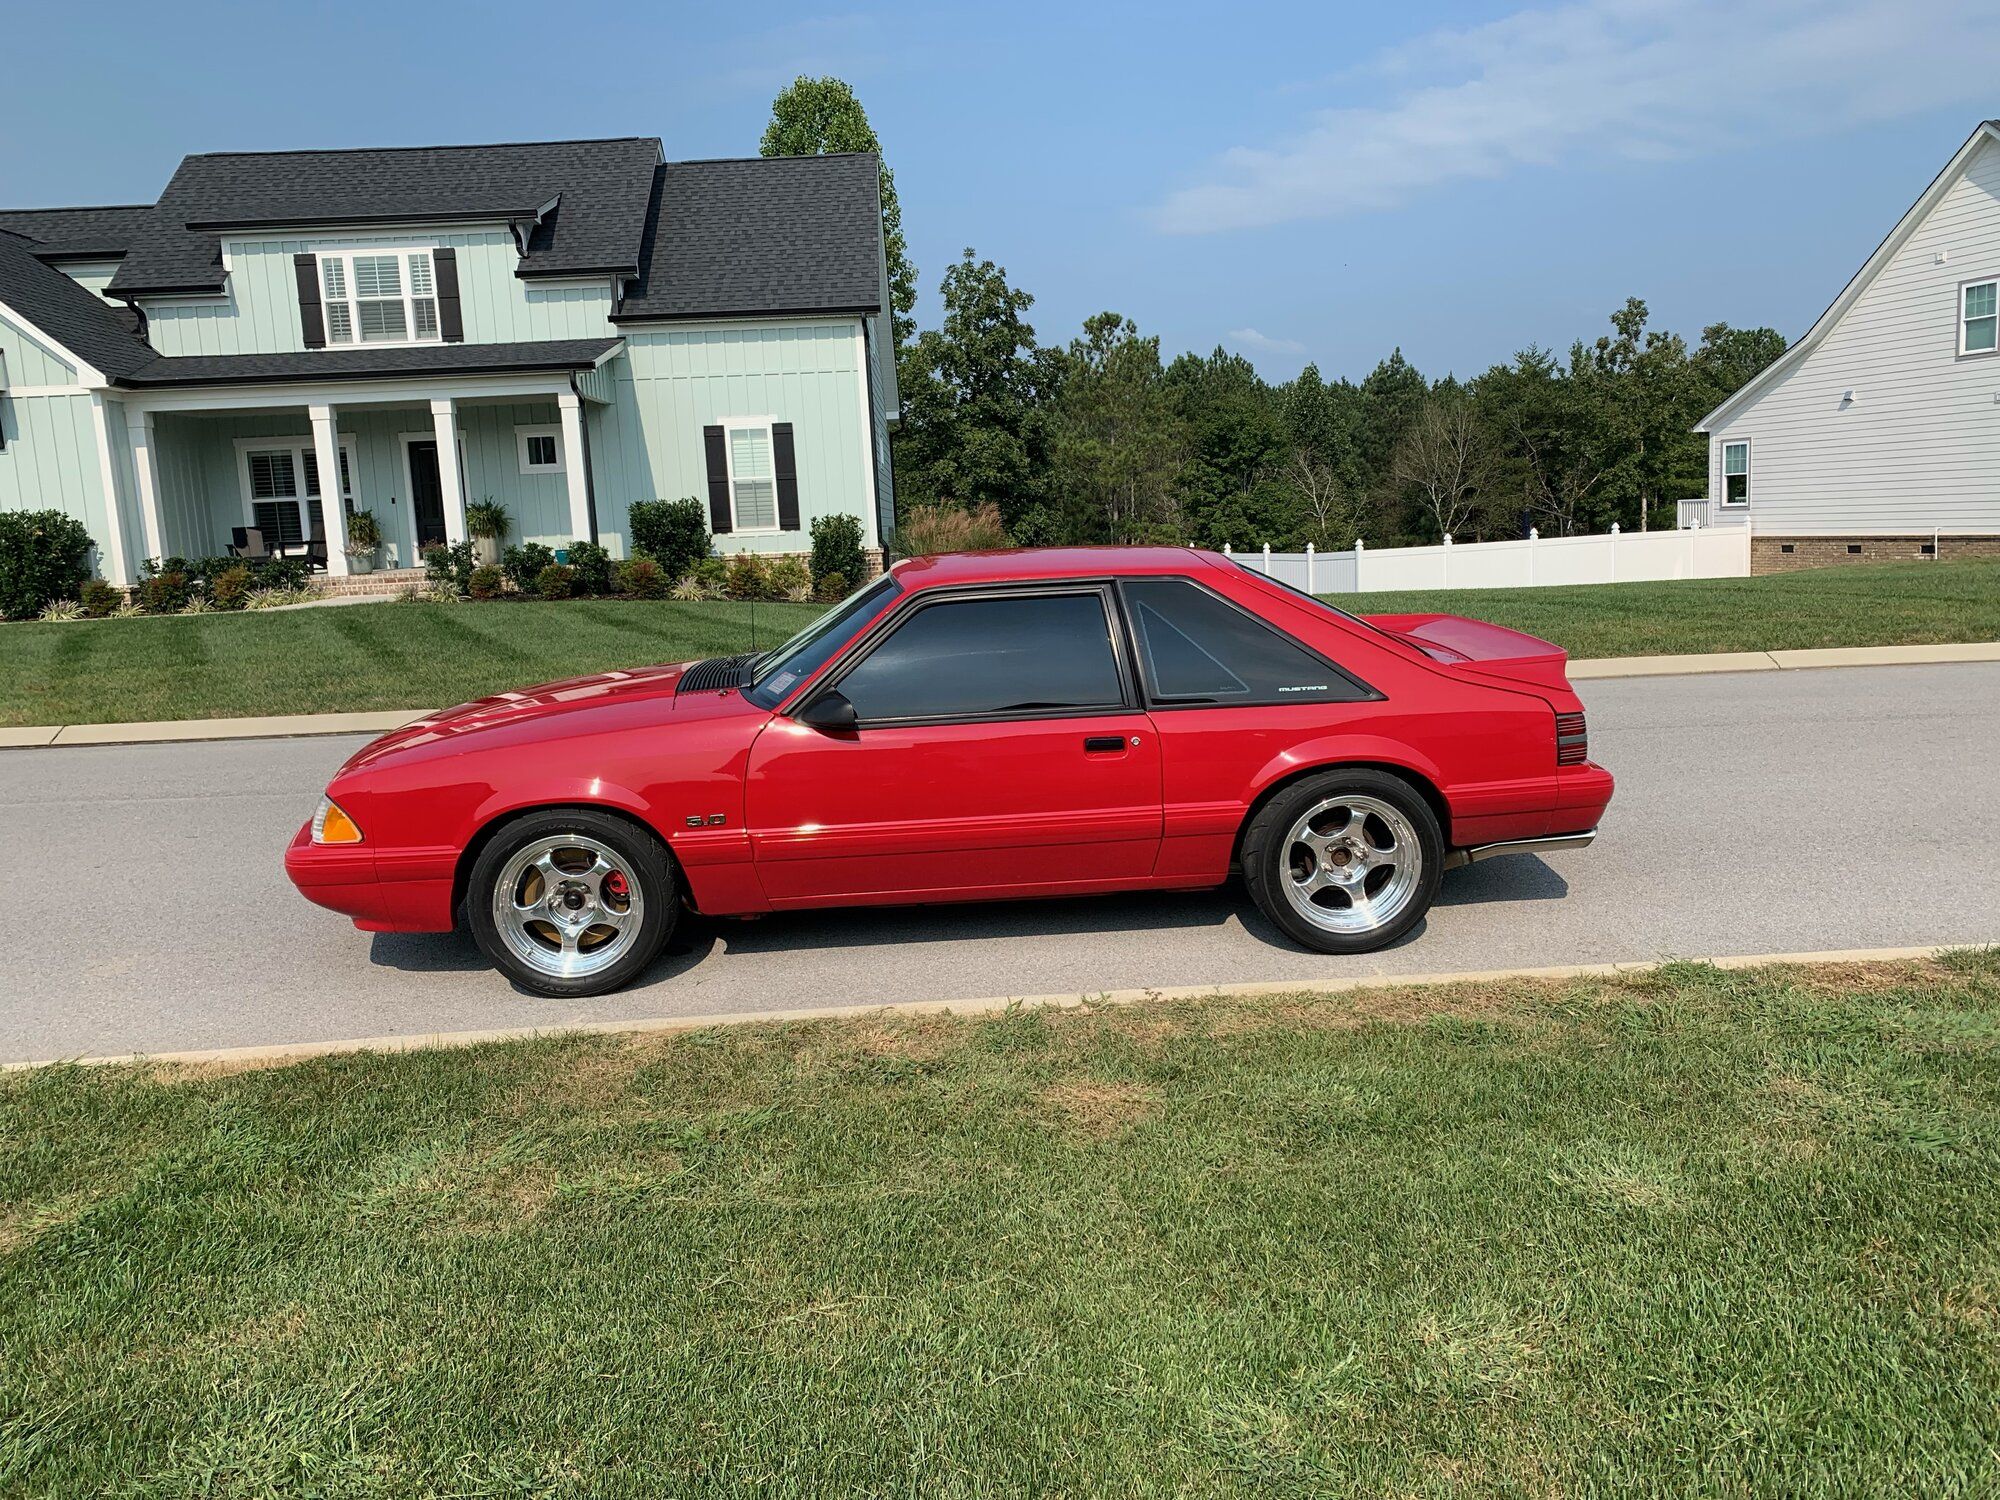 1993 Mustang
(1993 Mustang Build)